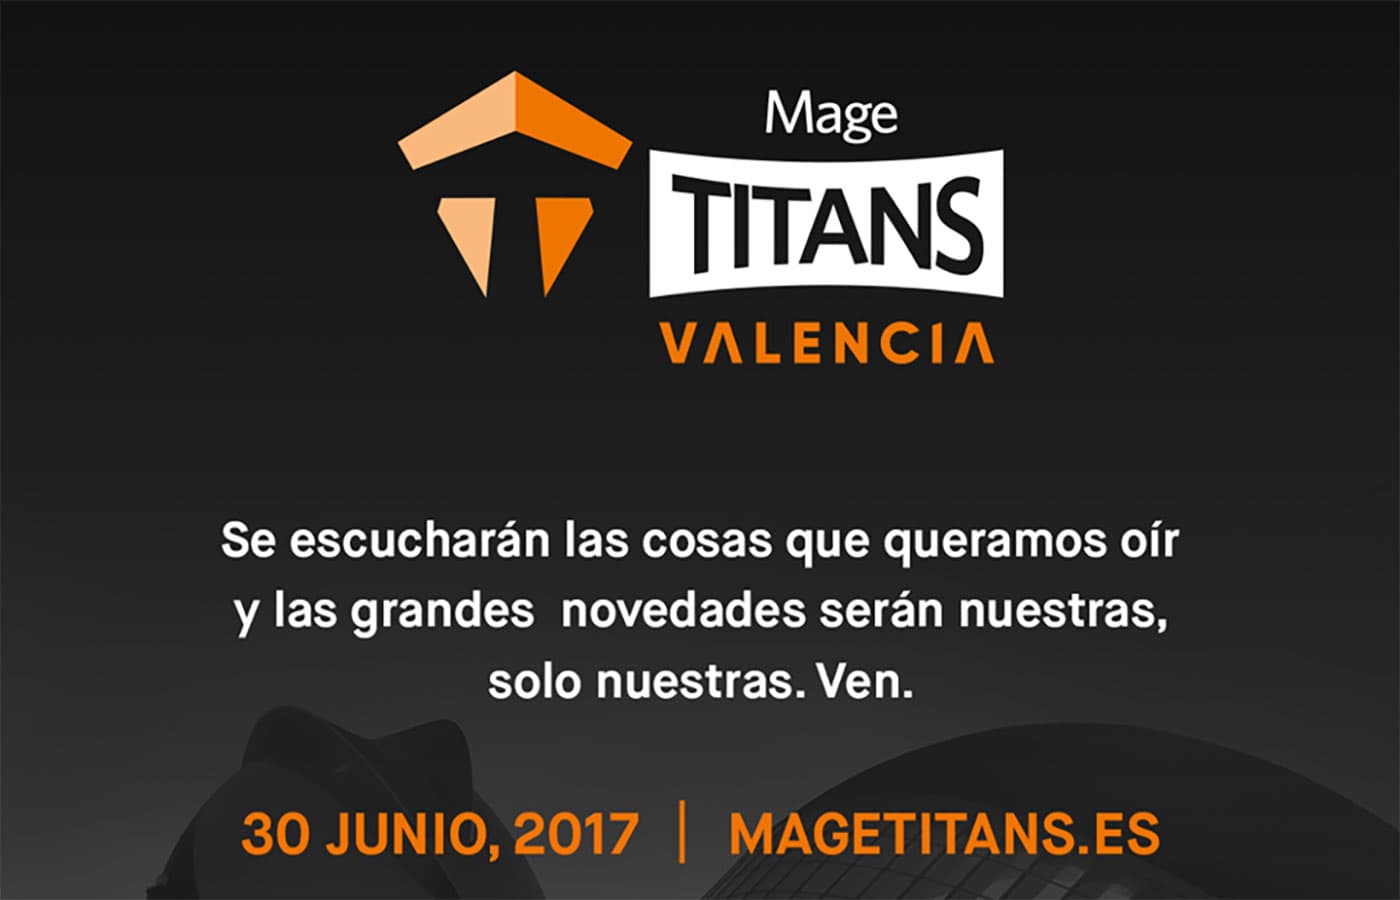 Evento Mage Titans 2017 en Valencia